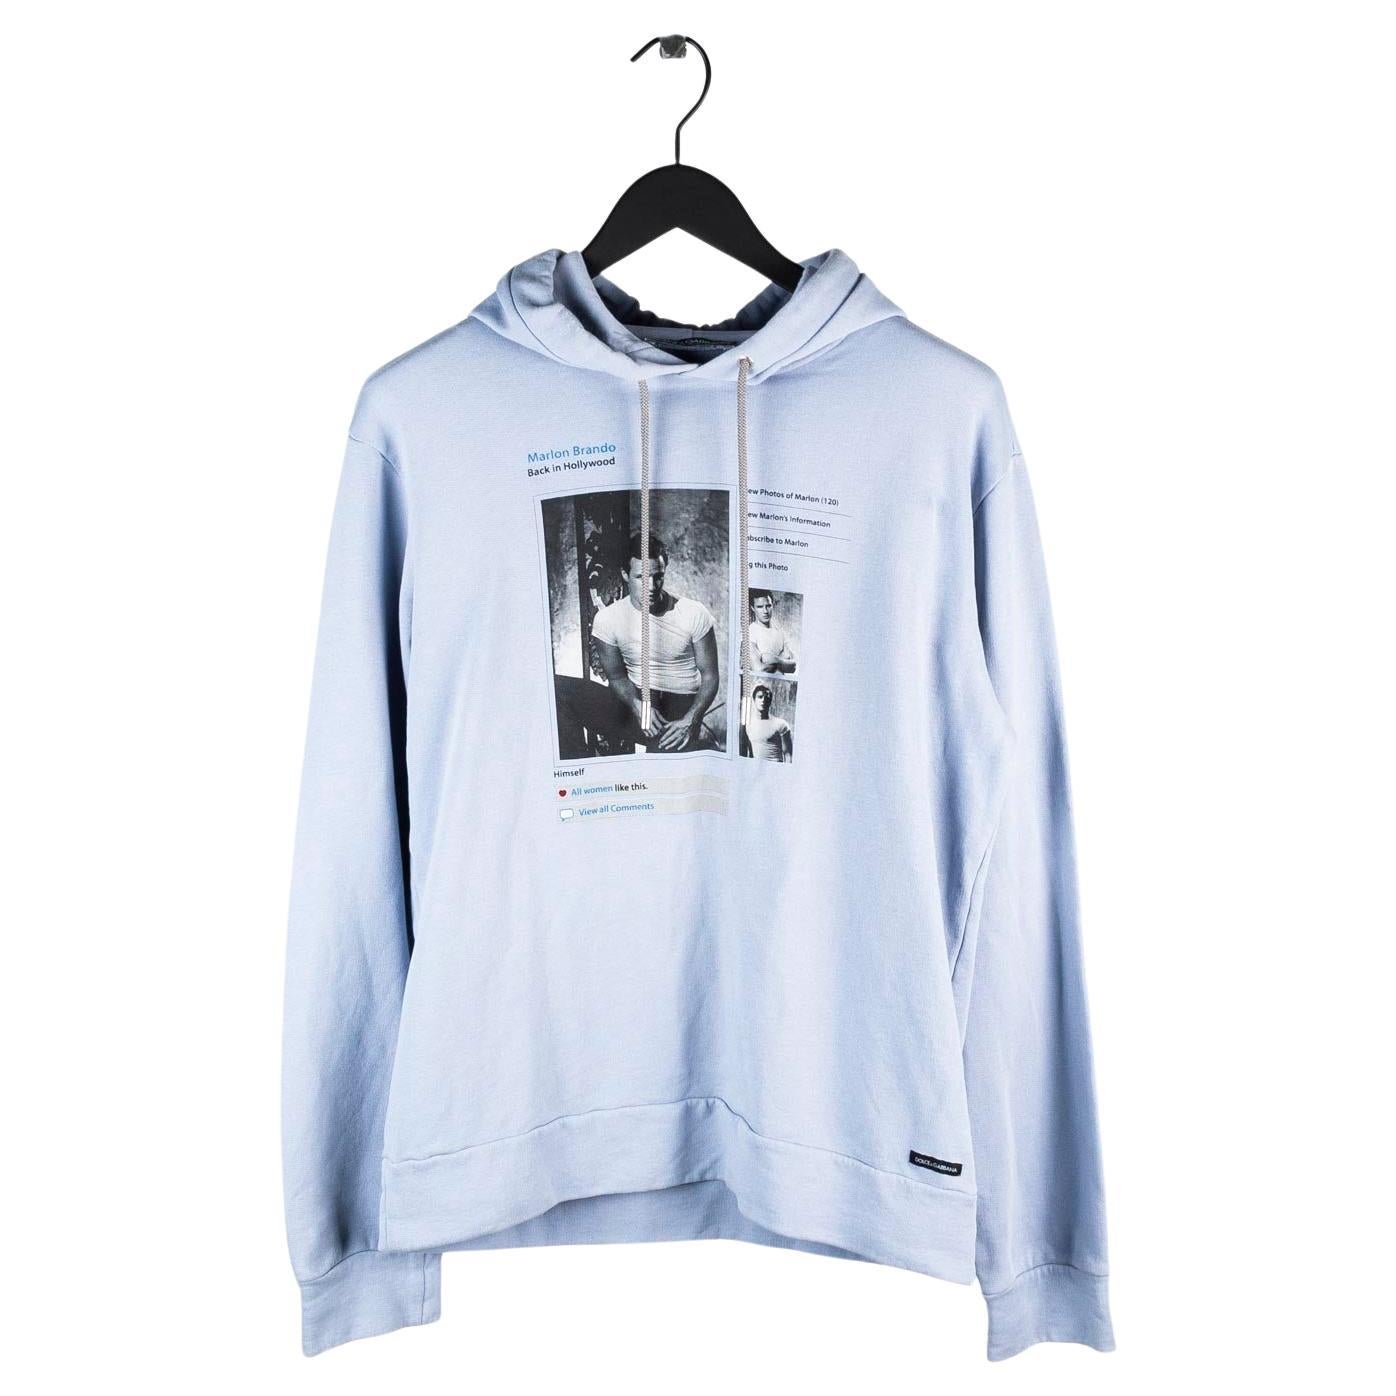 Dolce&Gabbana Marlon Brando Hoodie Sweatshirt Men Jumper Size 48IT, S541